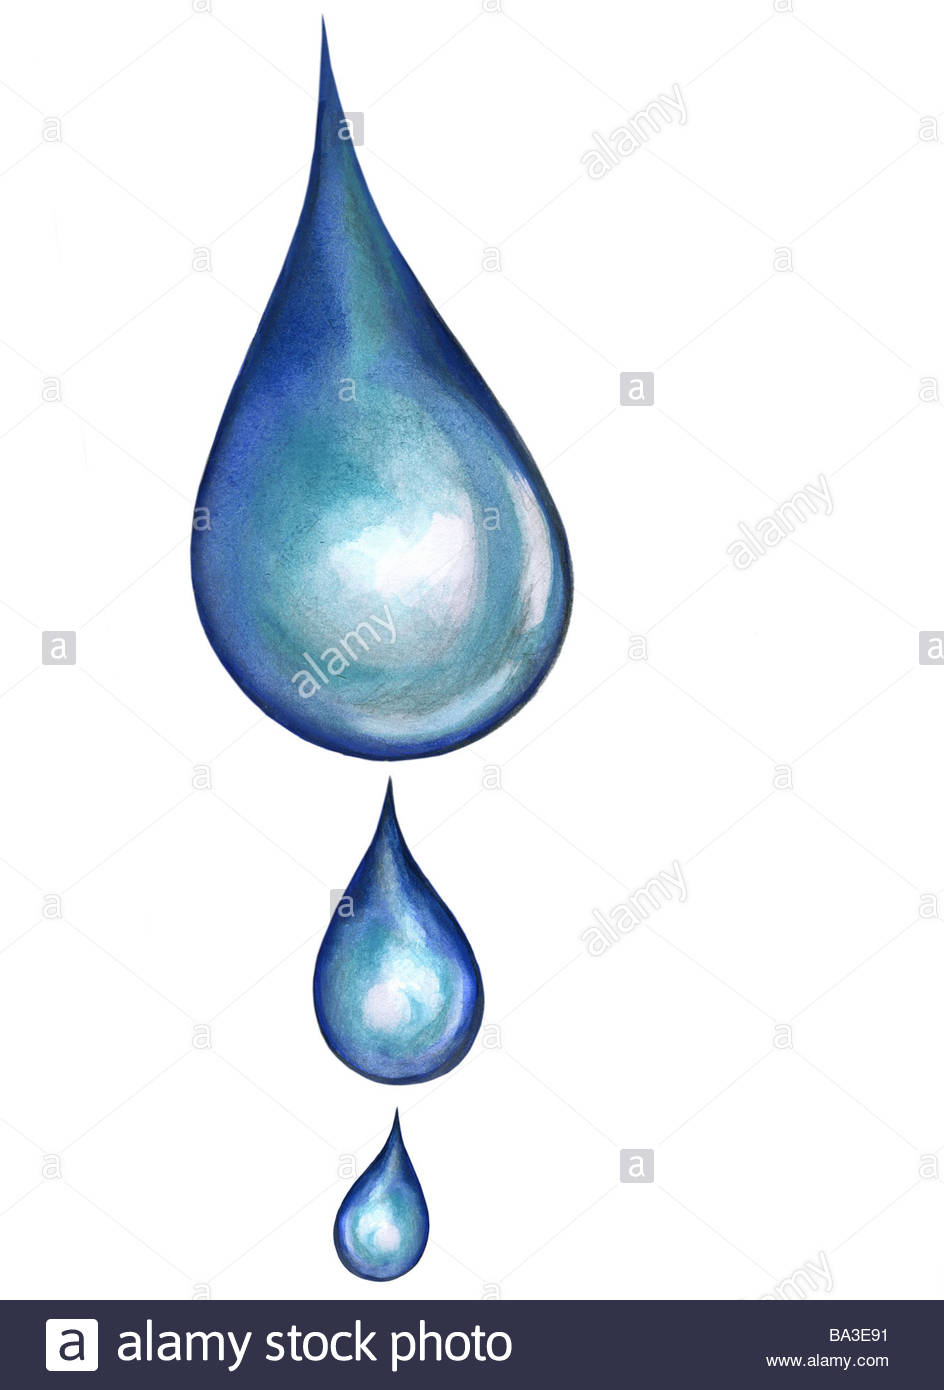 Drop Of Water Drawing at GetDrawings | Free download